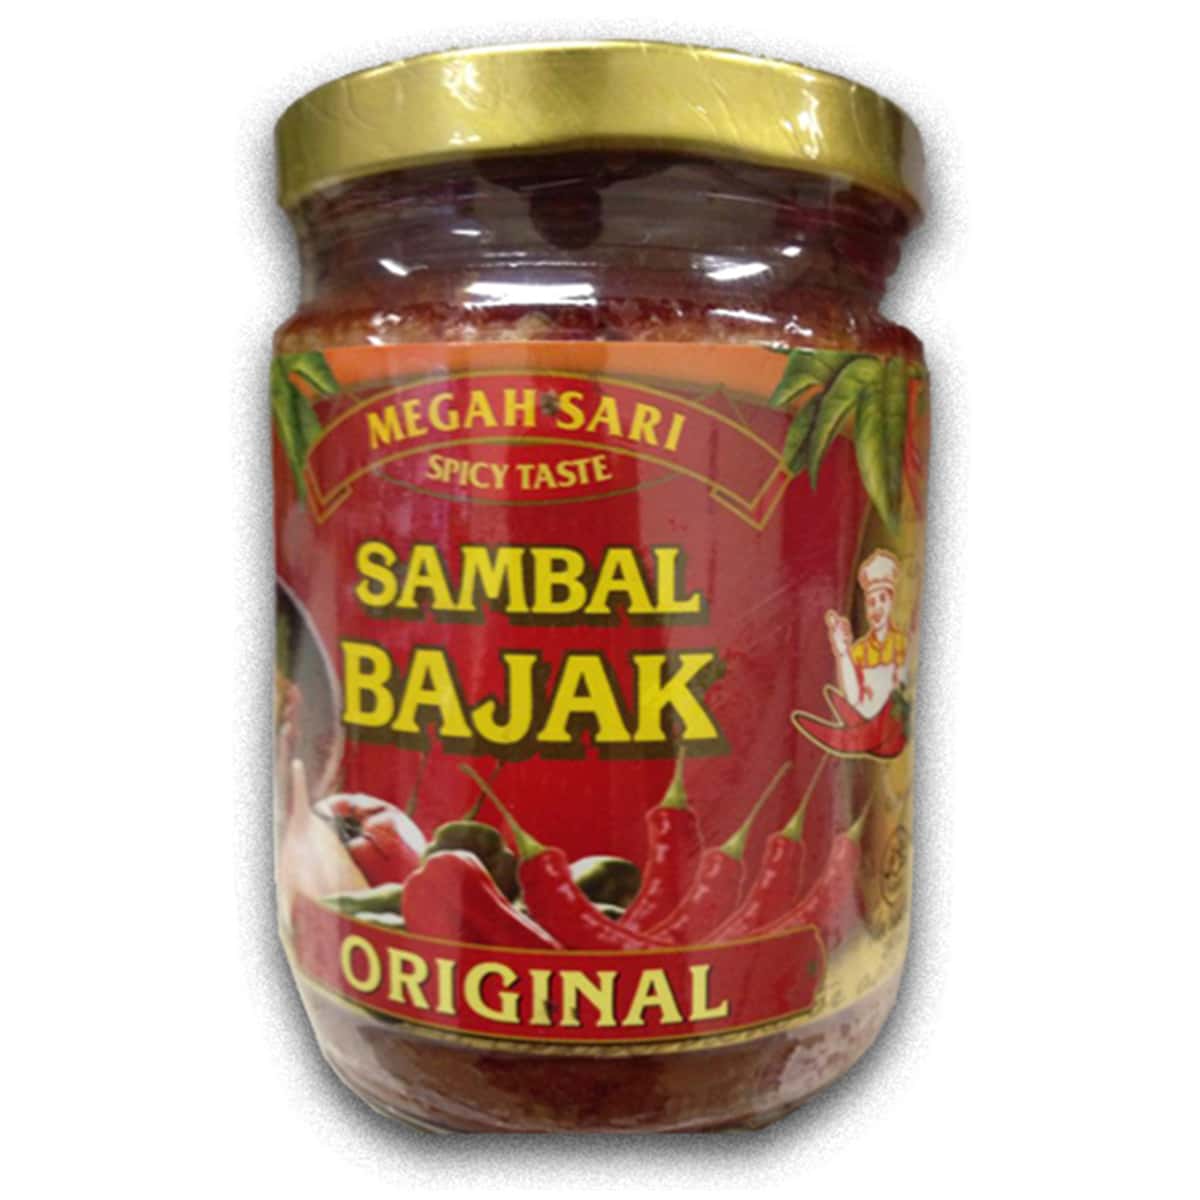 Buy Megah Sari Spicy Taste Sambal Bajak (Original) - 250 ml